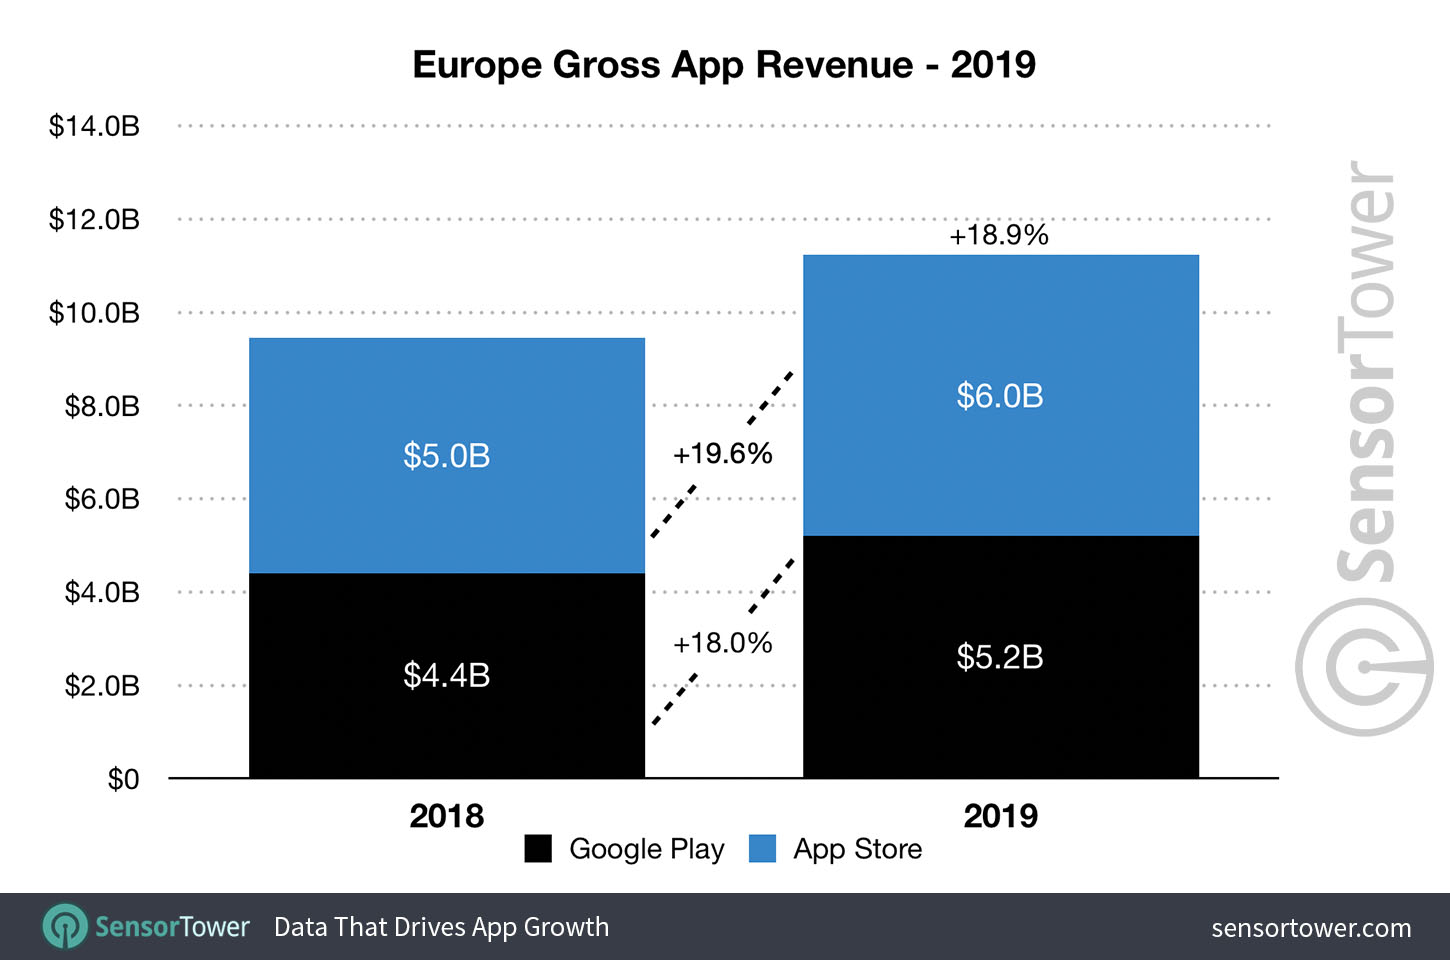 European mobile app revenue grew to $11.2 billion in 2019